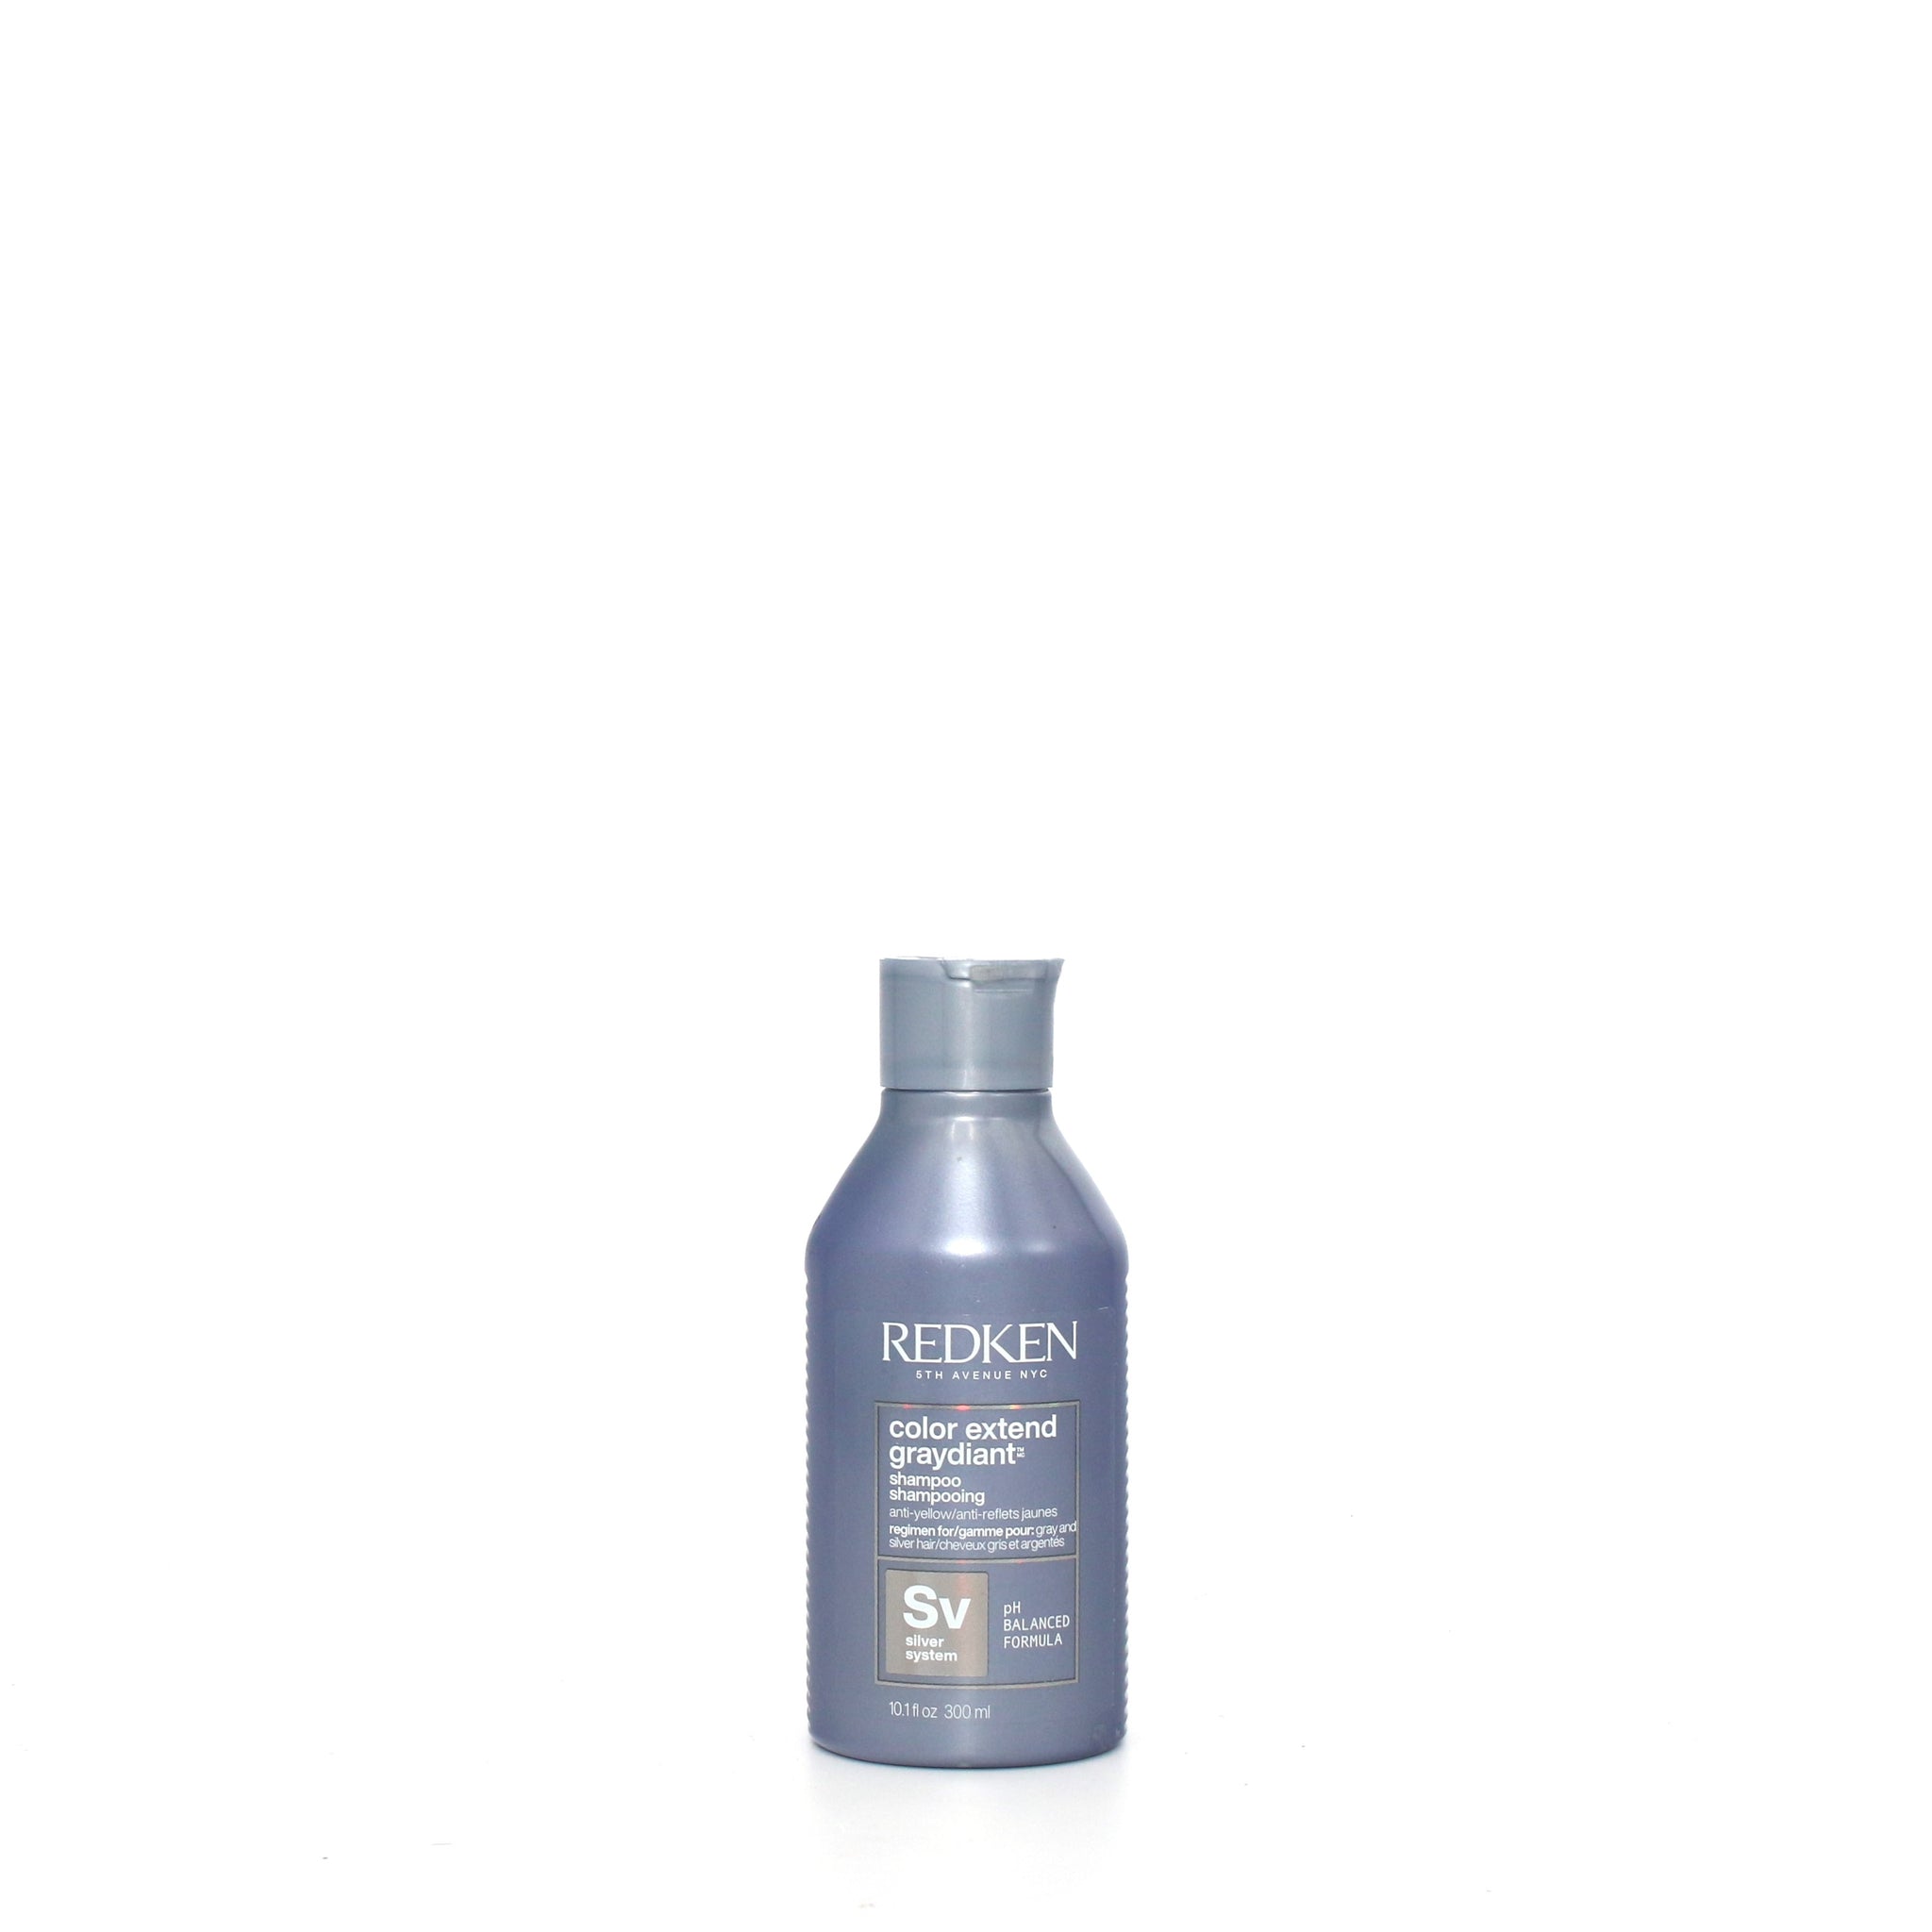 REDKEN Color Extend Graydiant Shampoo 10.1 oz